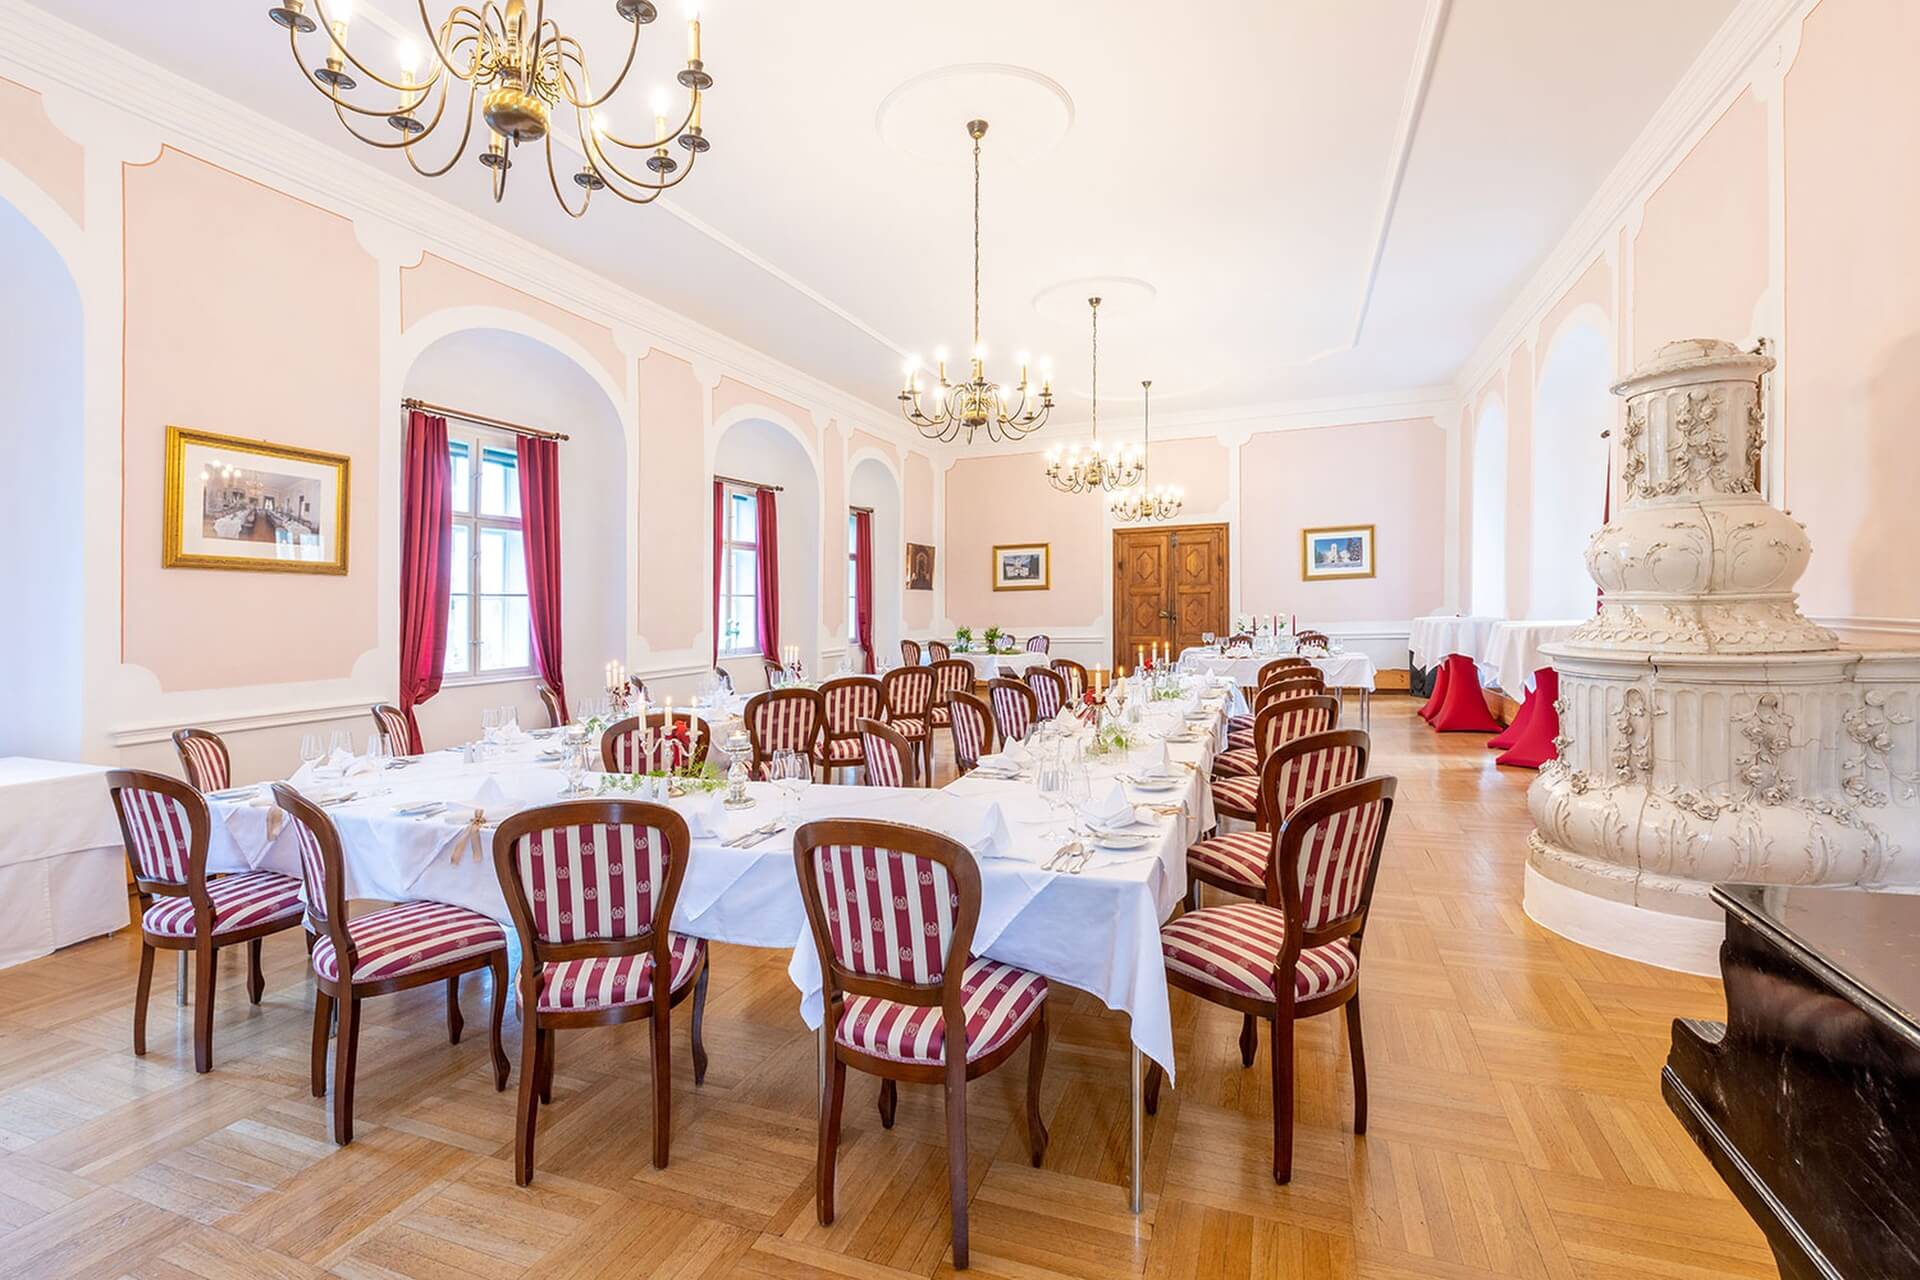 Schlosshotel Rosenau Restaurant Wo Feiern Location Feier Seminar Tagung festsaal